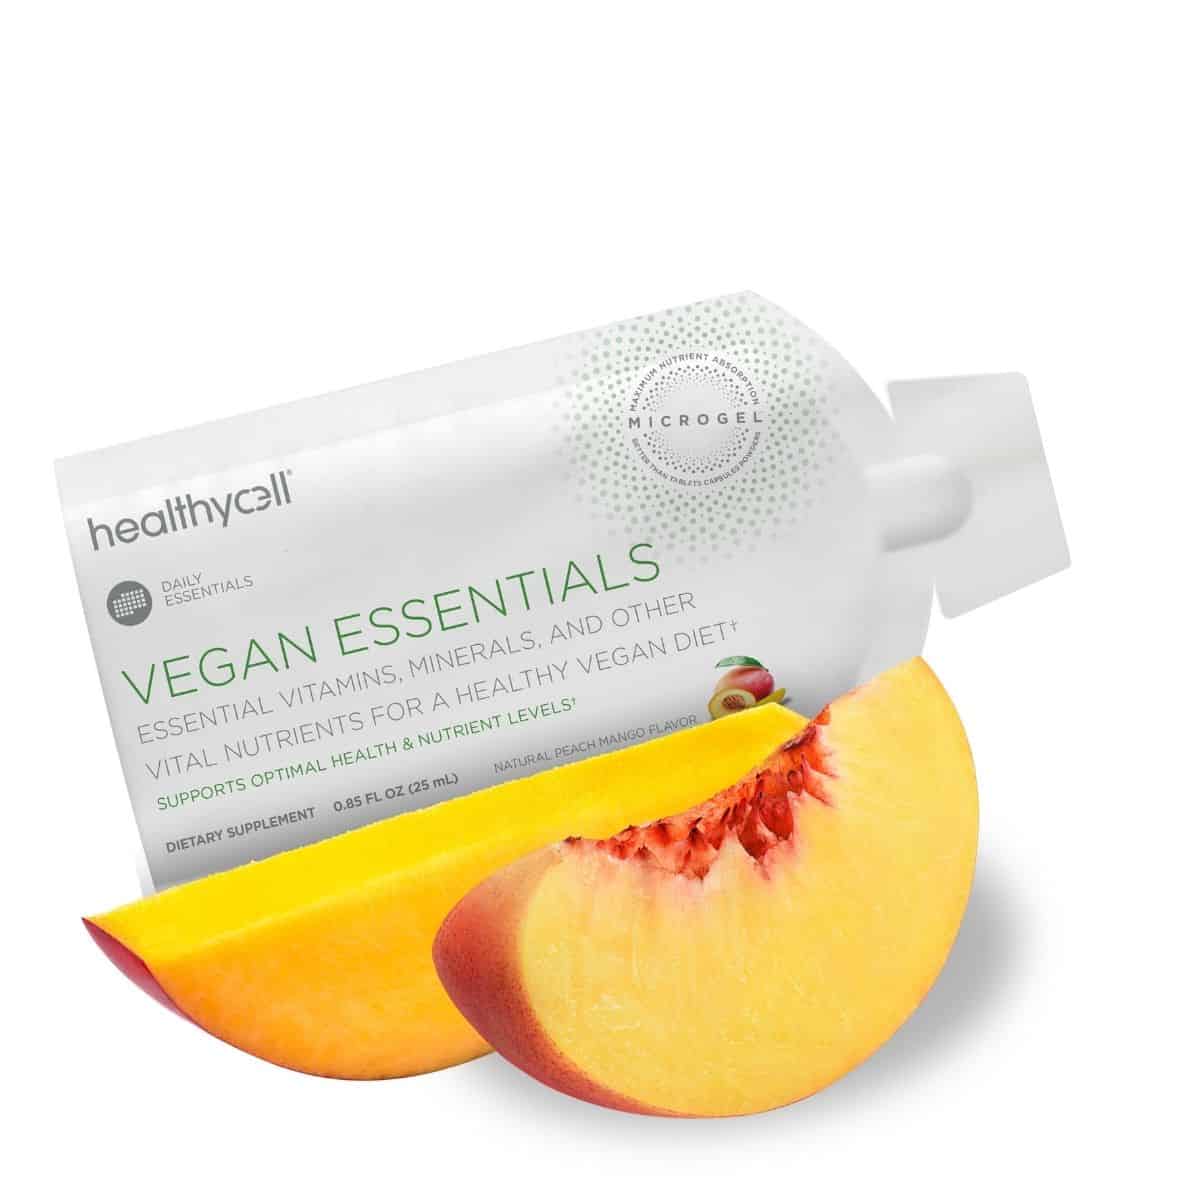 healthycell vegan essentials packet